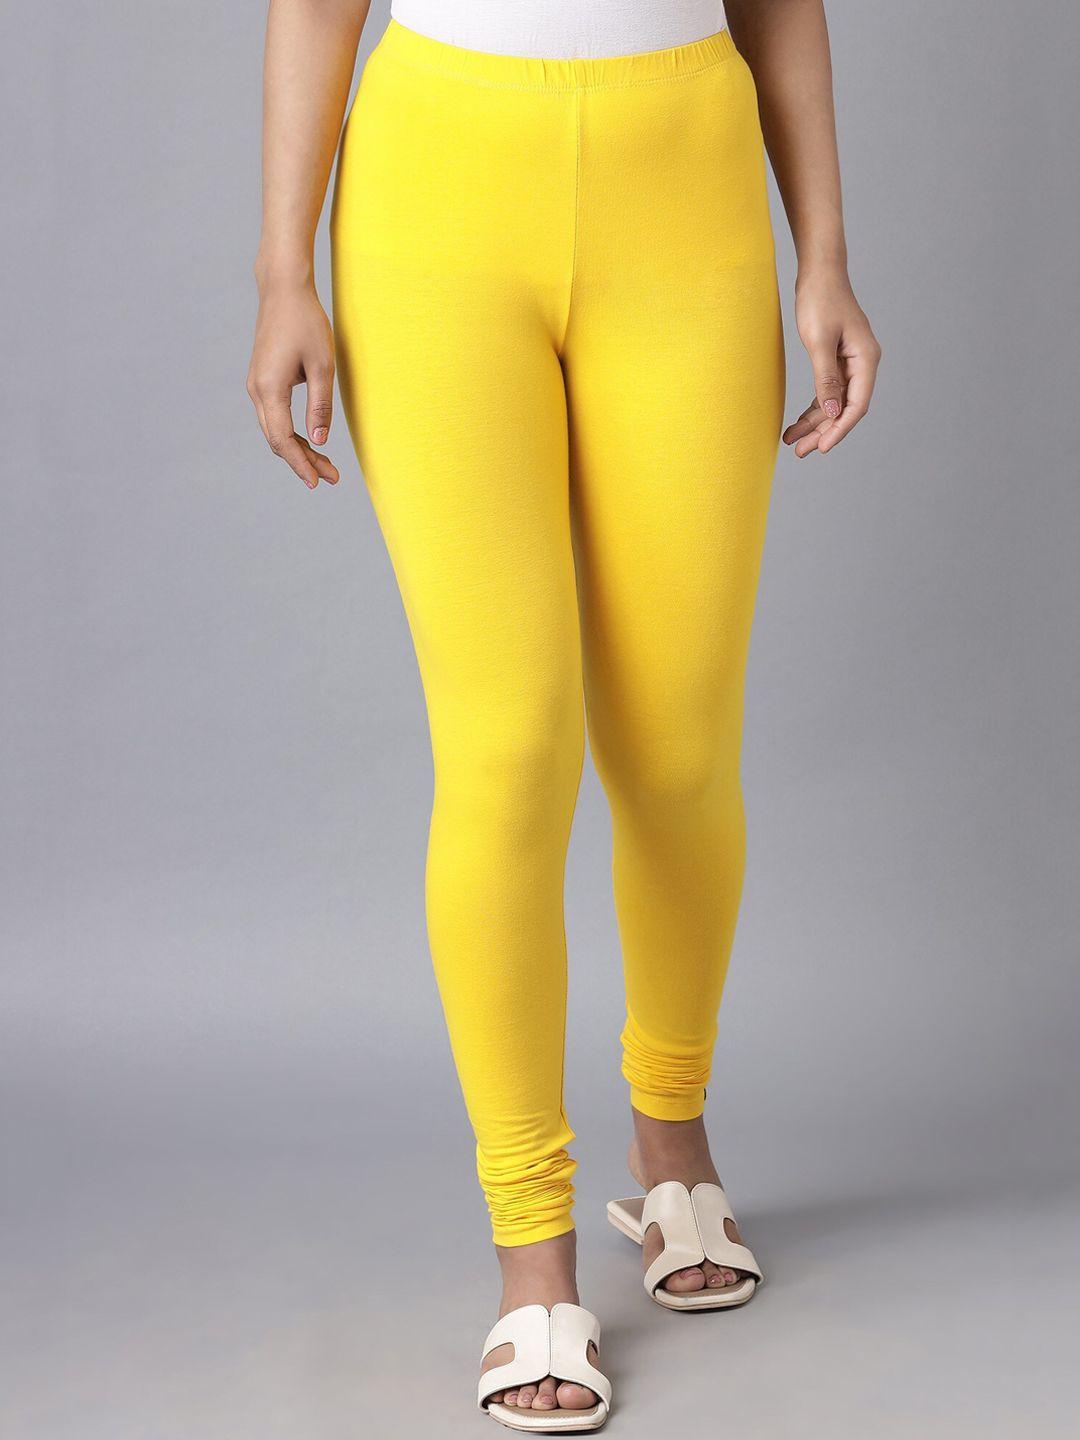 elleven women yellow solid ankle-length skin fit leggings